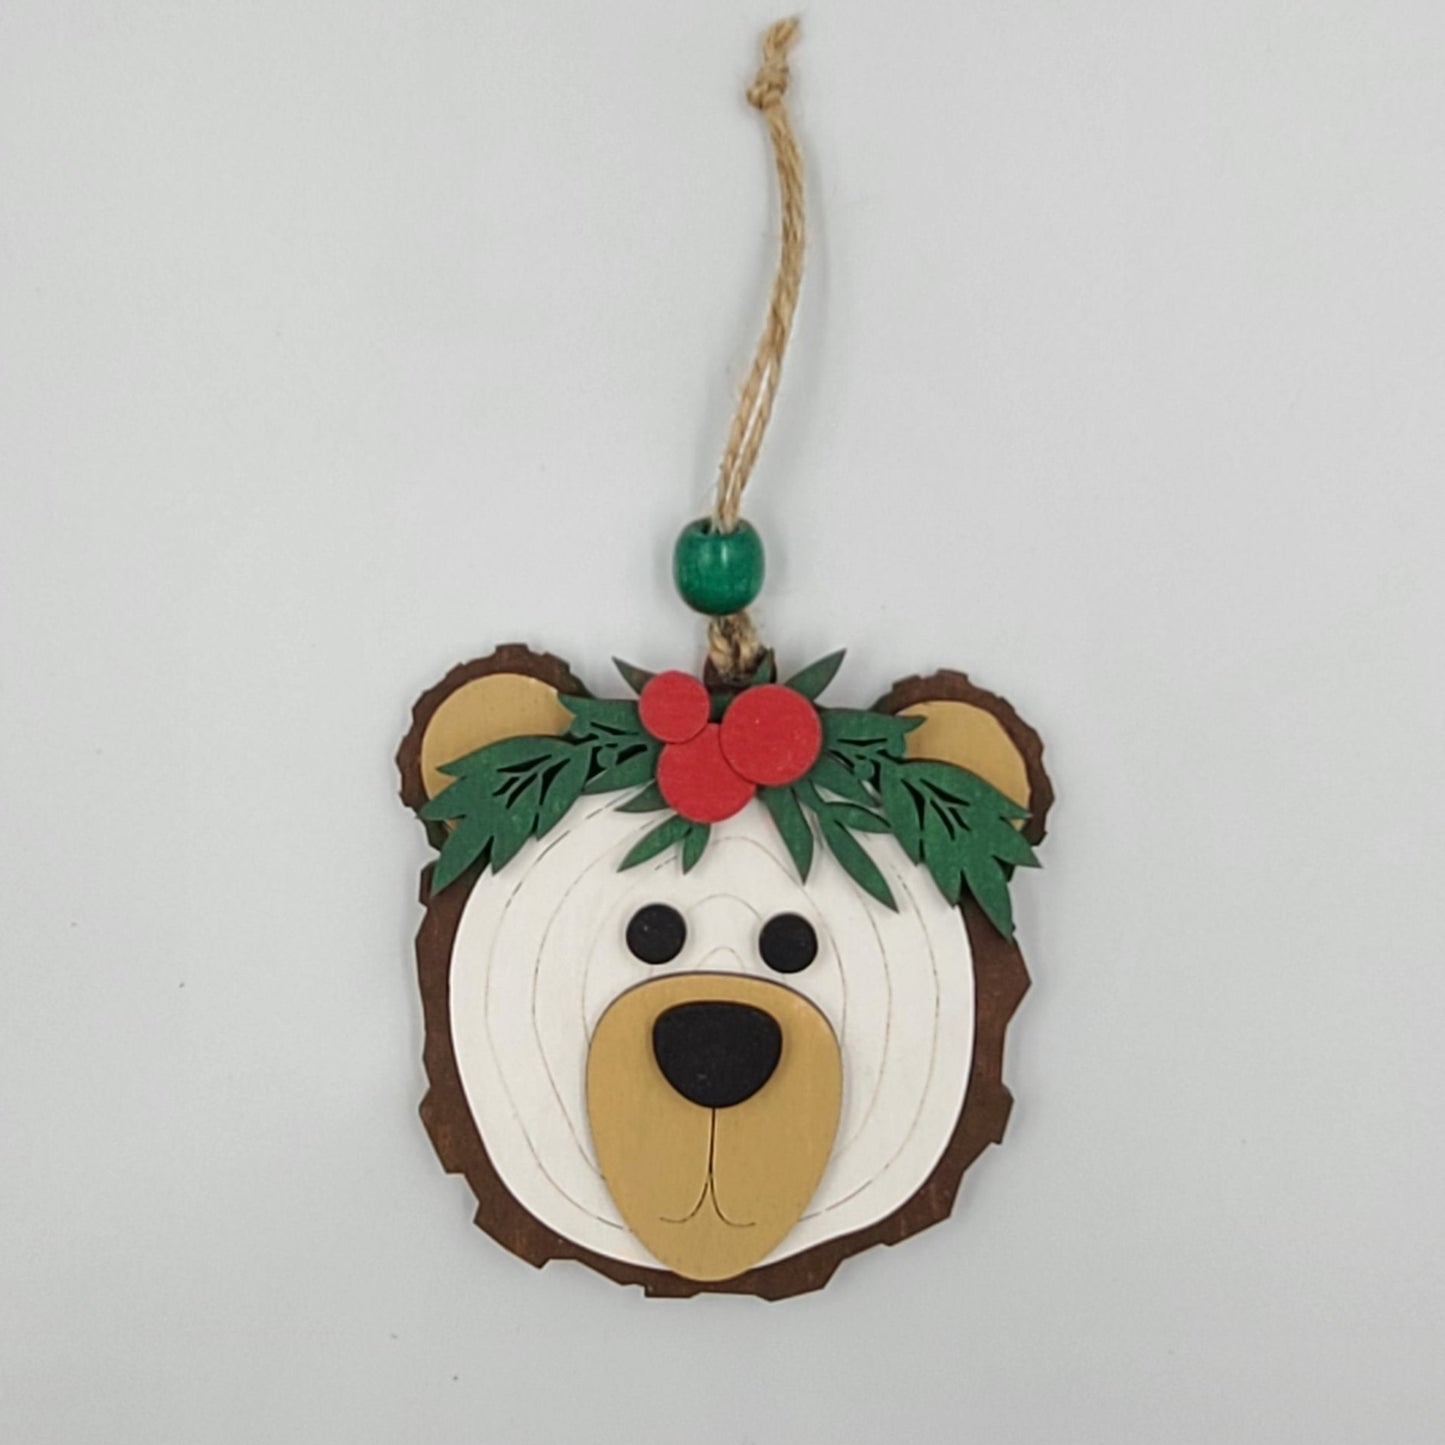 Woodslice Animal Ornament